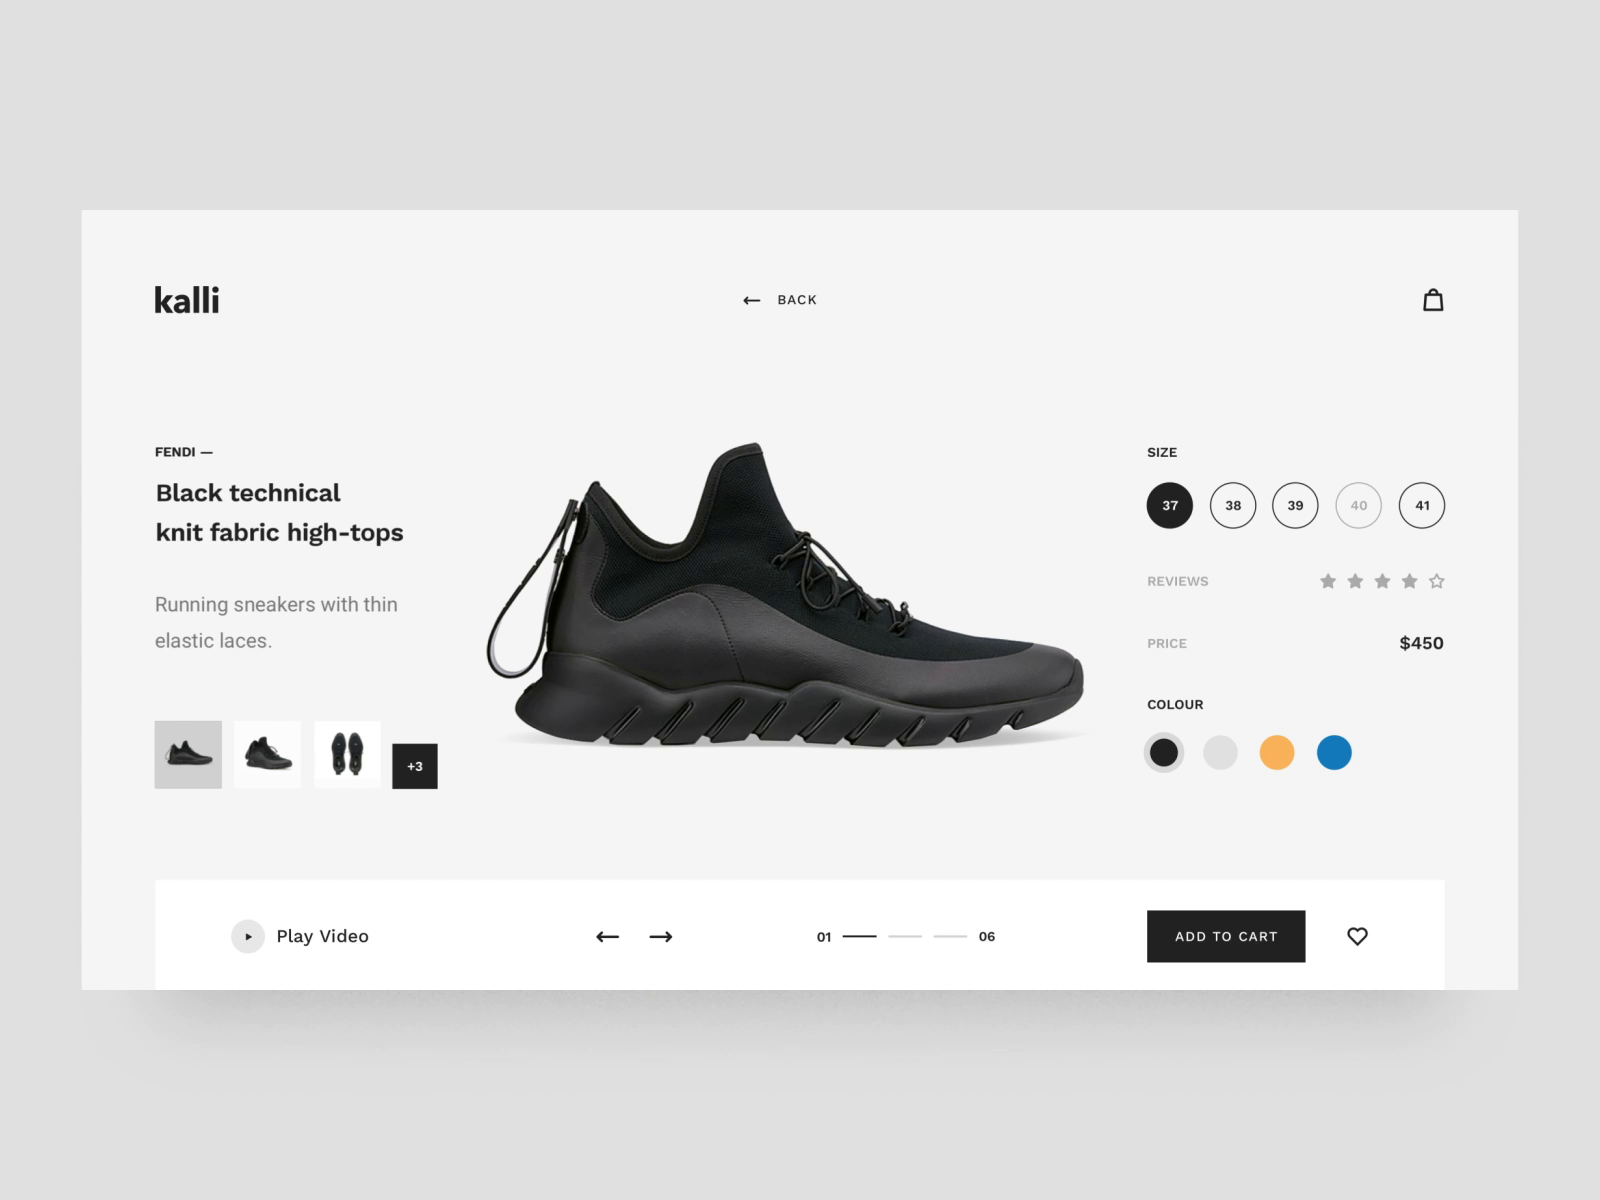 online shoes design